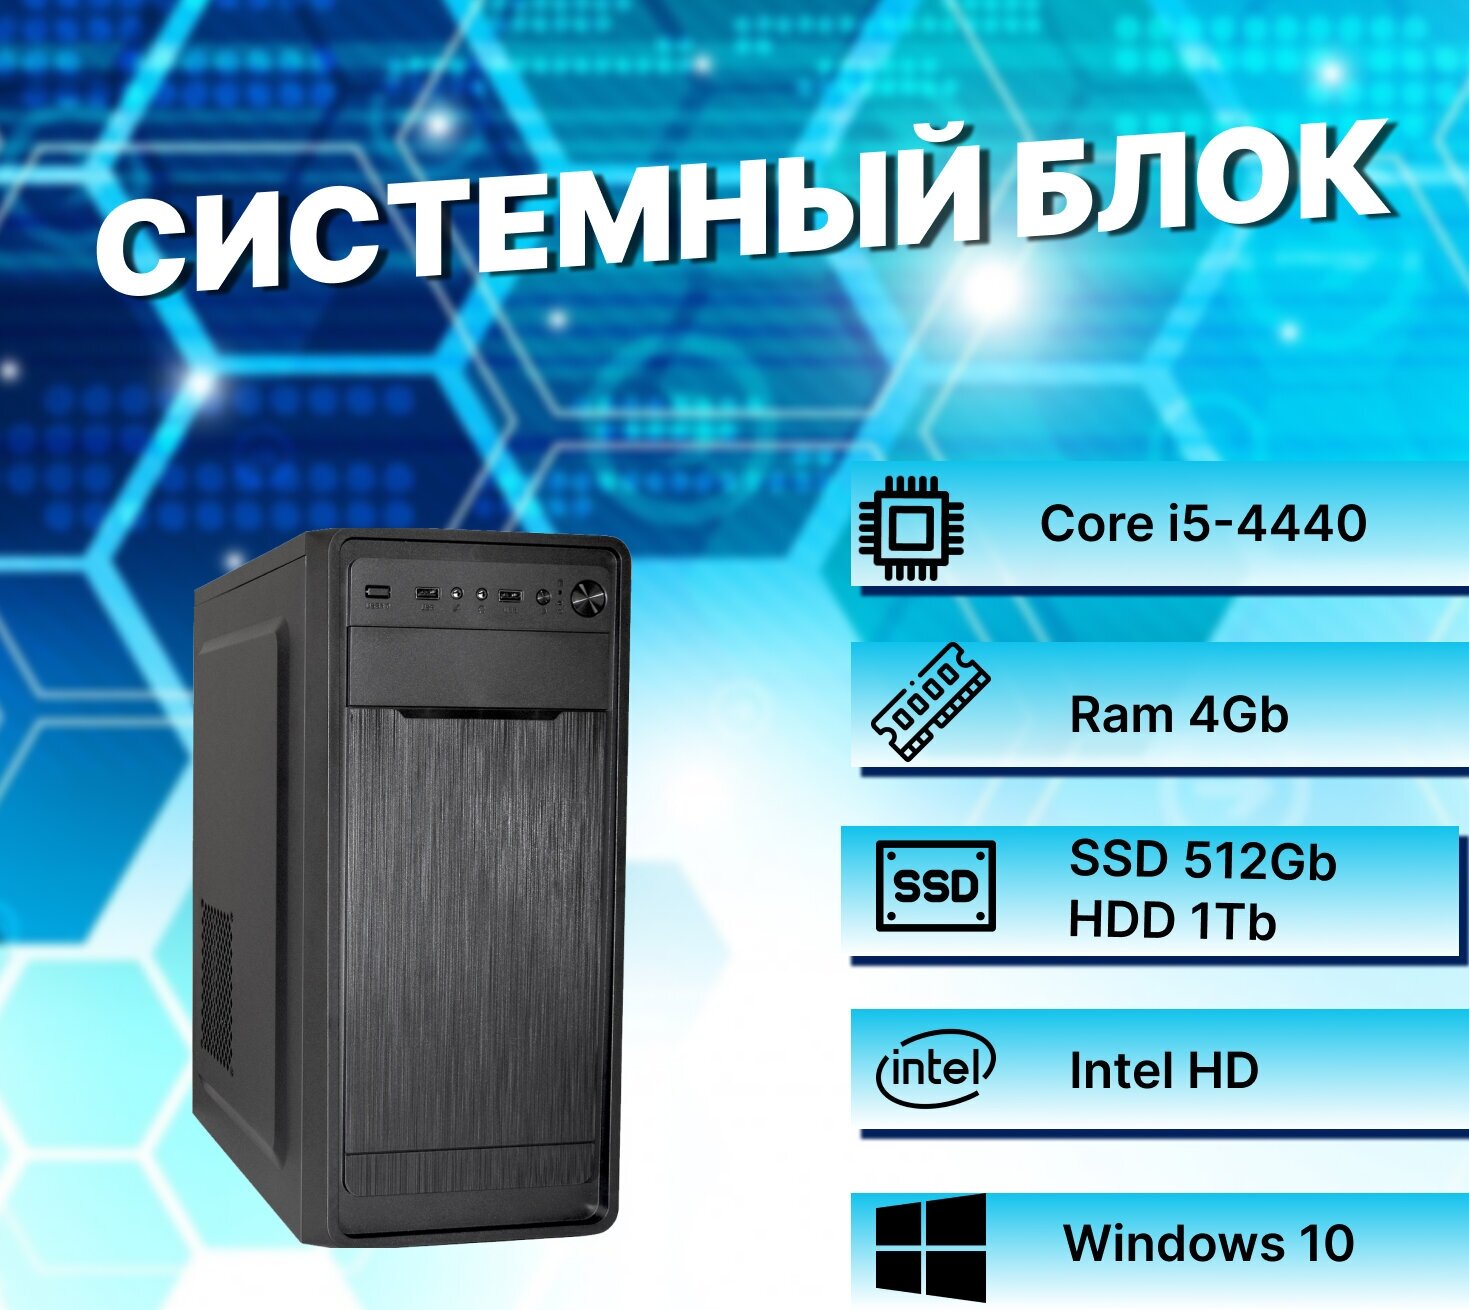 Системный блок Intel Core i5-4440 (3.1ГГц)/ RAM 4Gb/ SSD 512Gb/ HDD 1Tb/Intel HD/ Windows 10 Pro